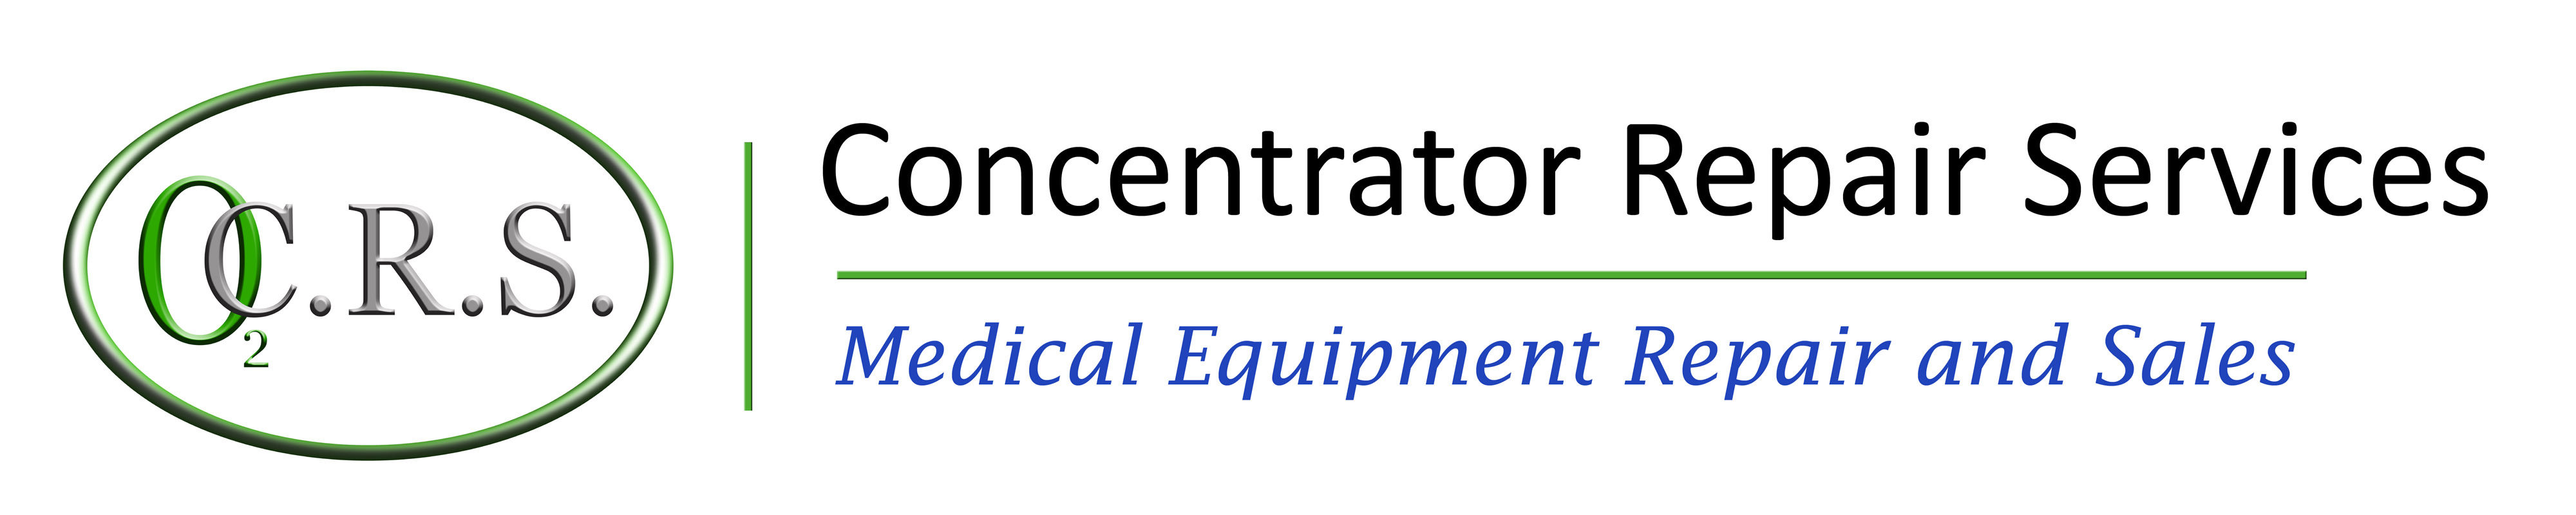 Oxygen Concentrator Repair - ACBIO